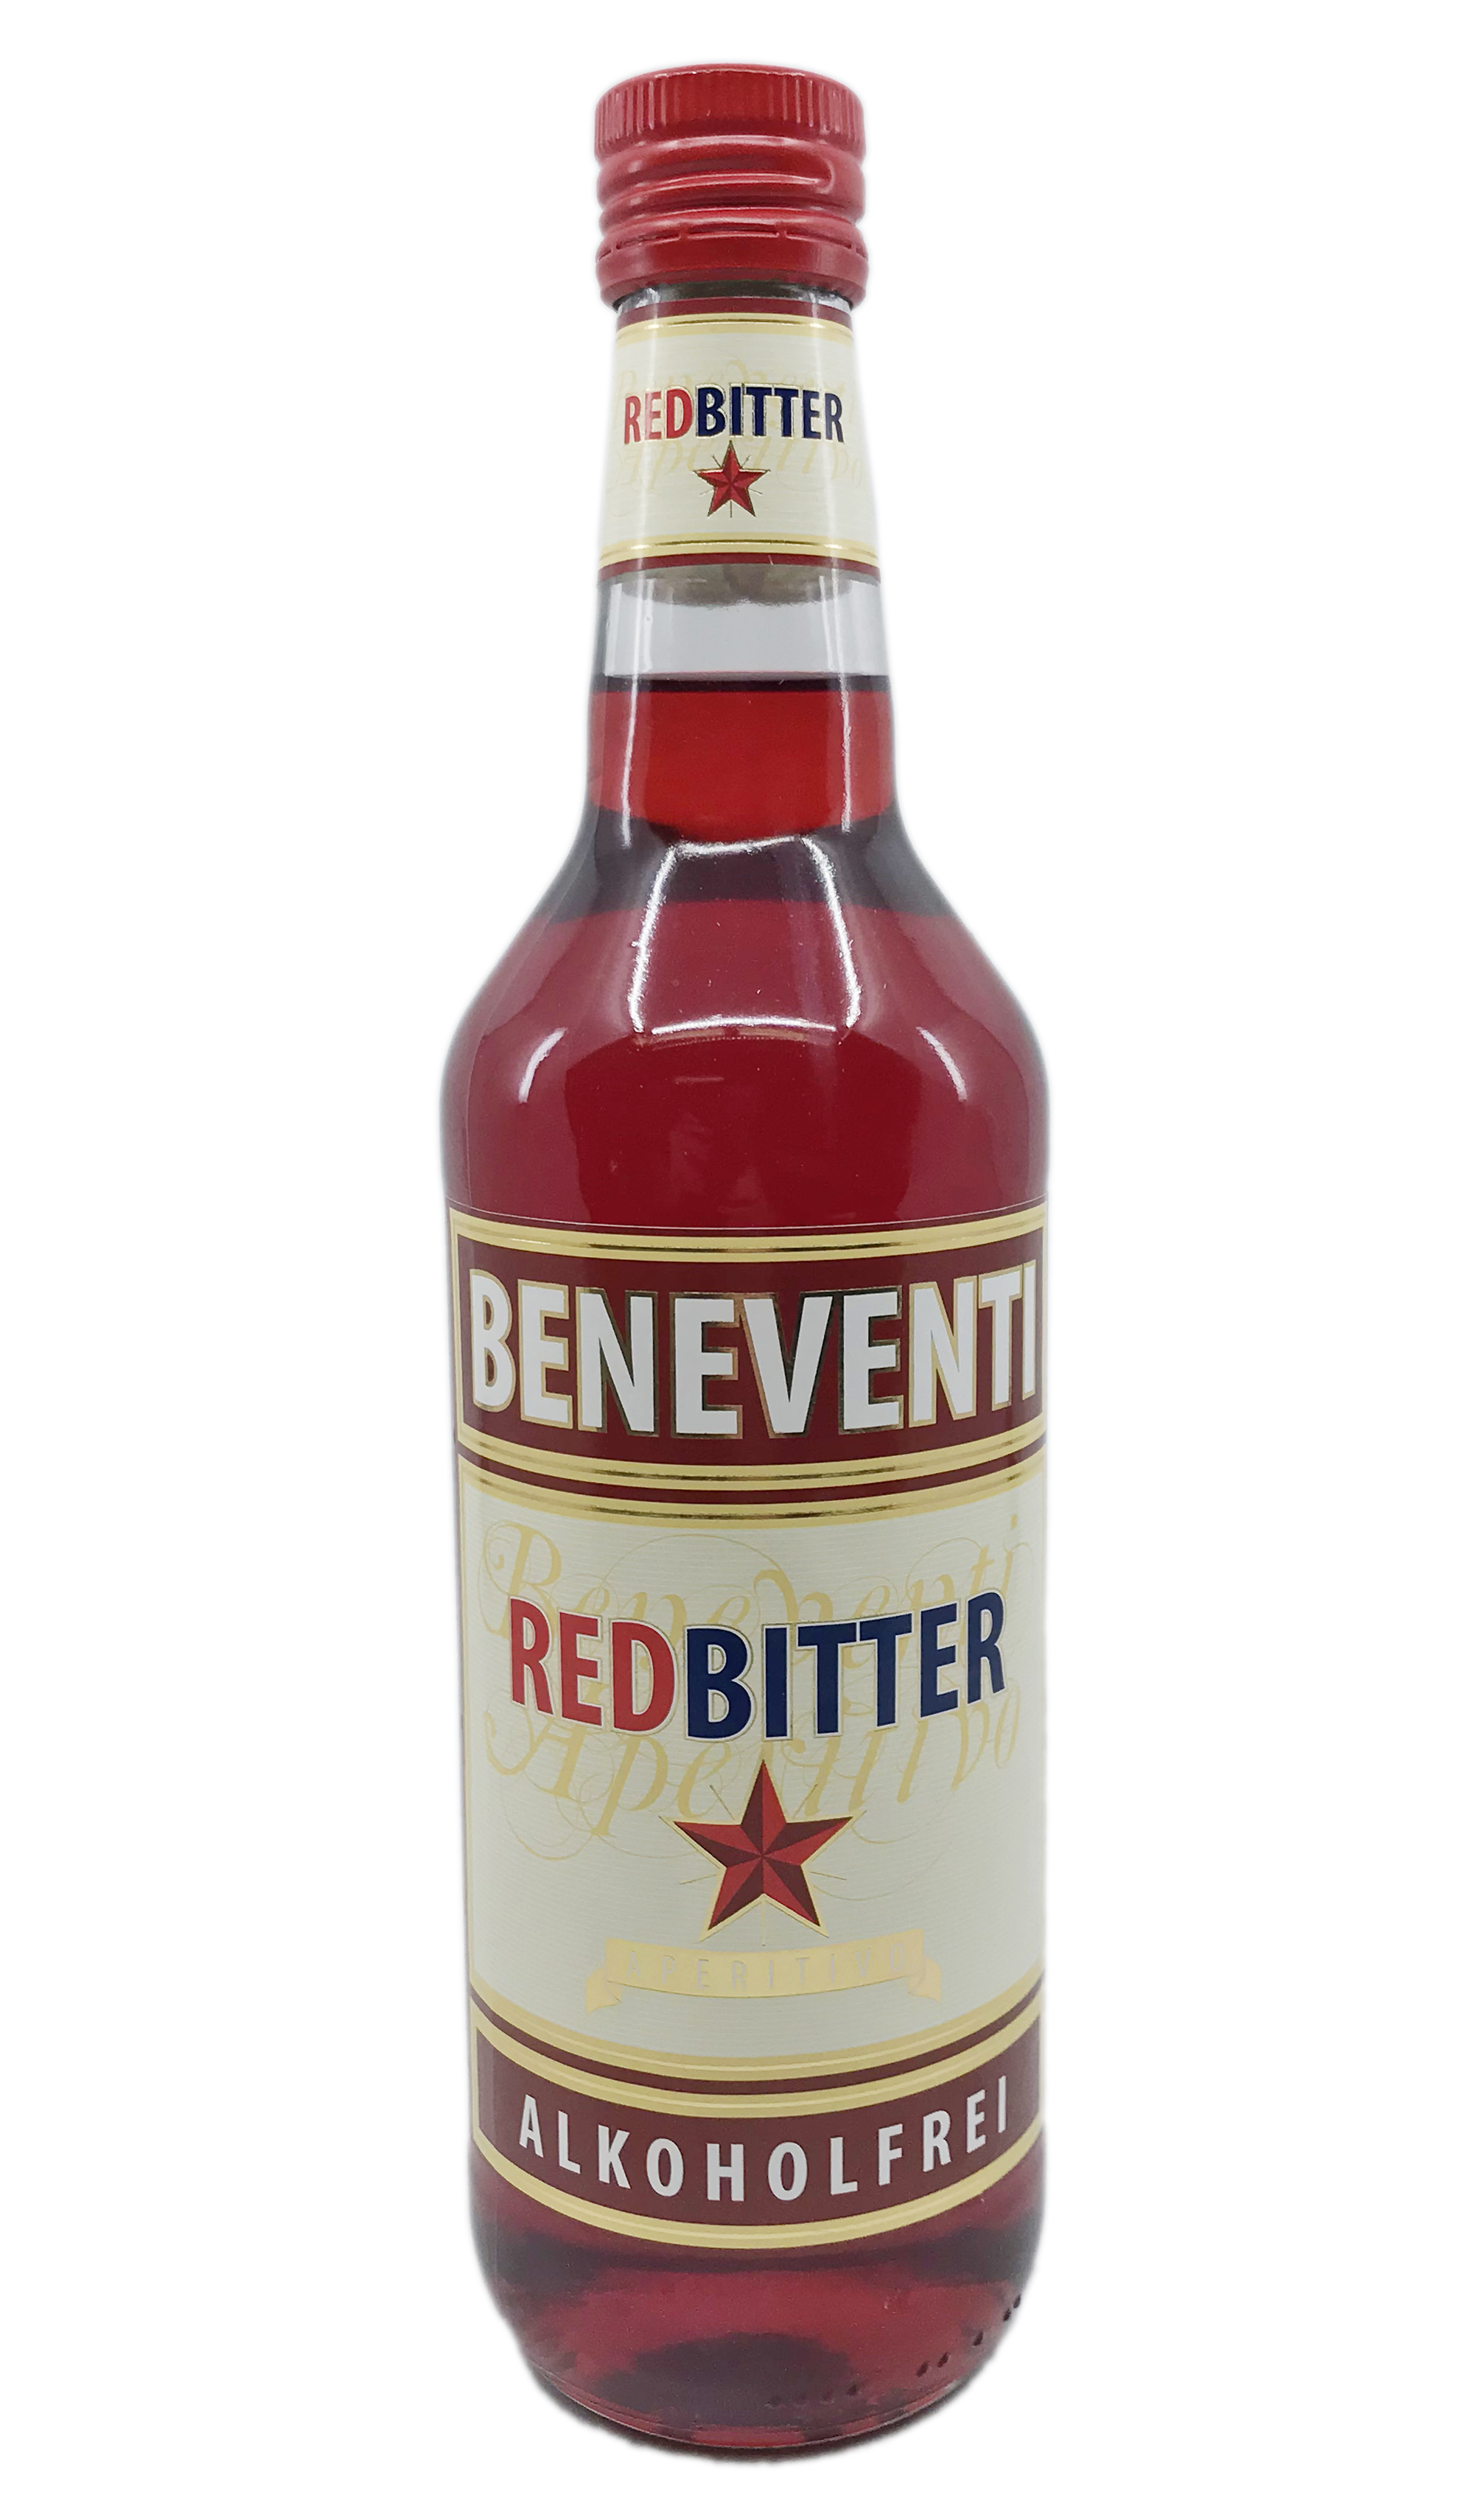 Beneventi Red Bitter - alkoholfrei - 0,7l - Beneventi Redbitter